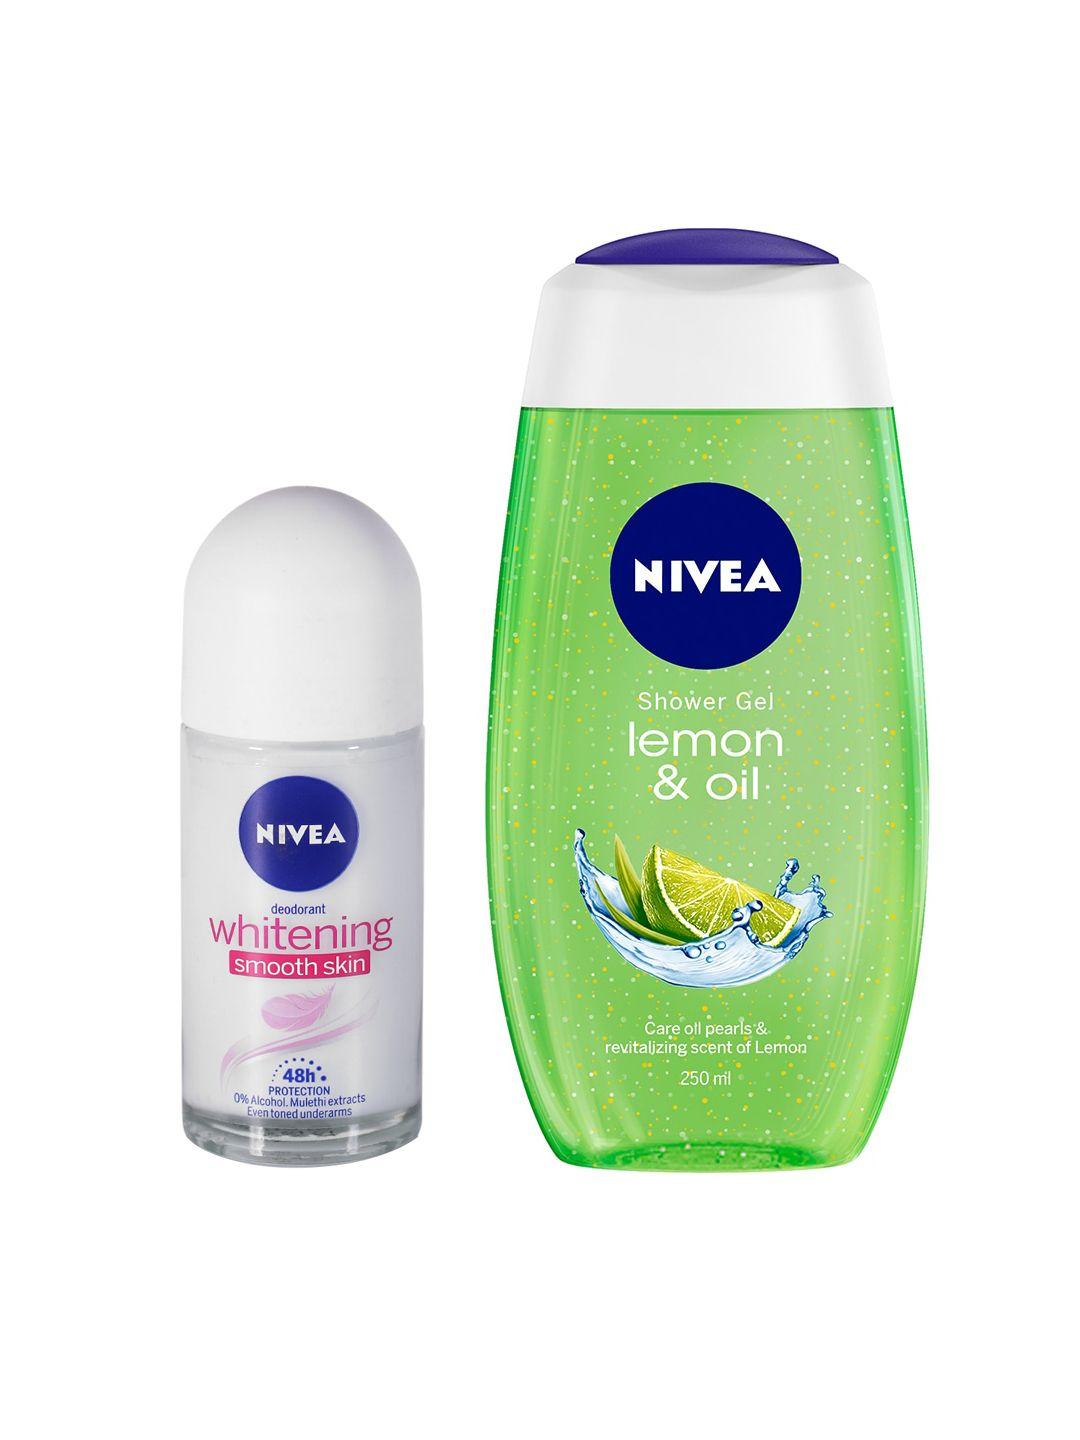 nivea set of lemon & oil shower gel with whitening smooth skin roll-on deodorant